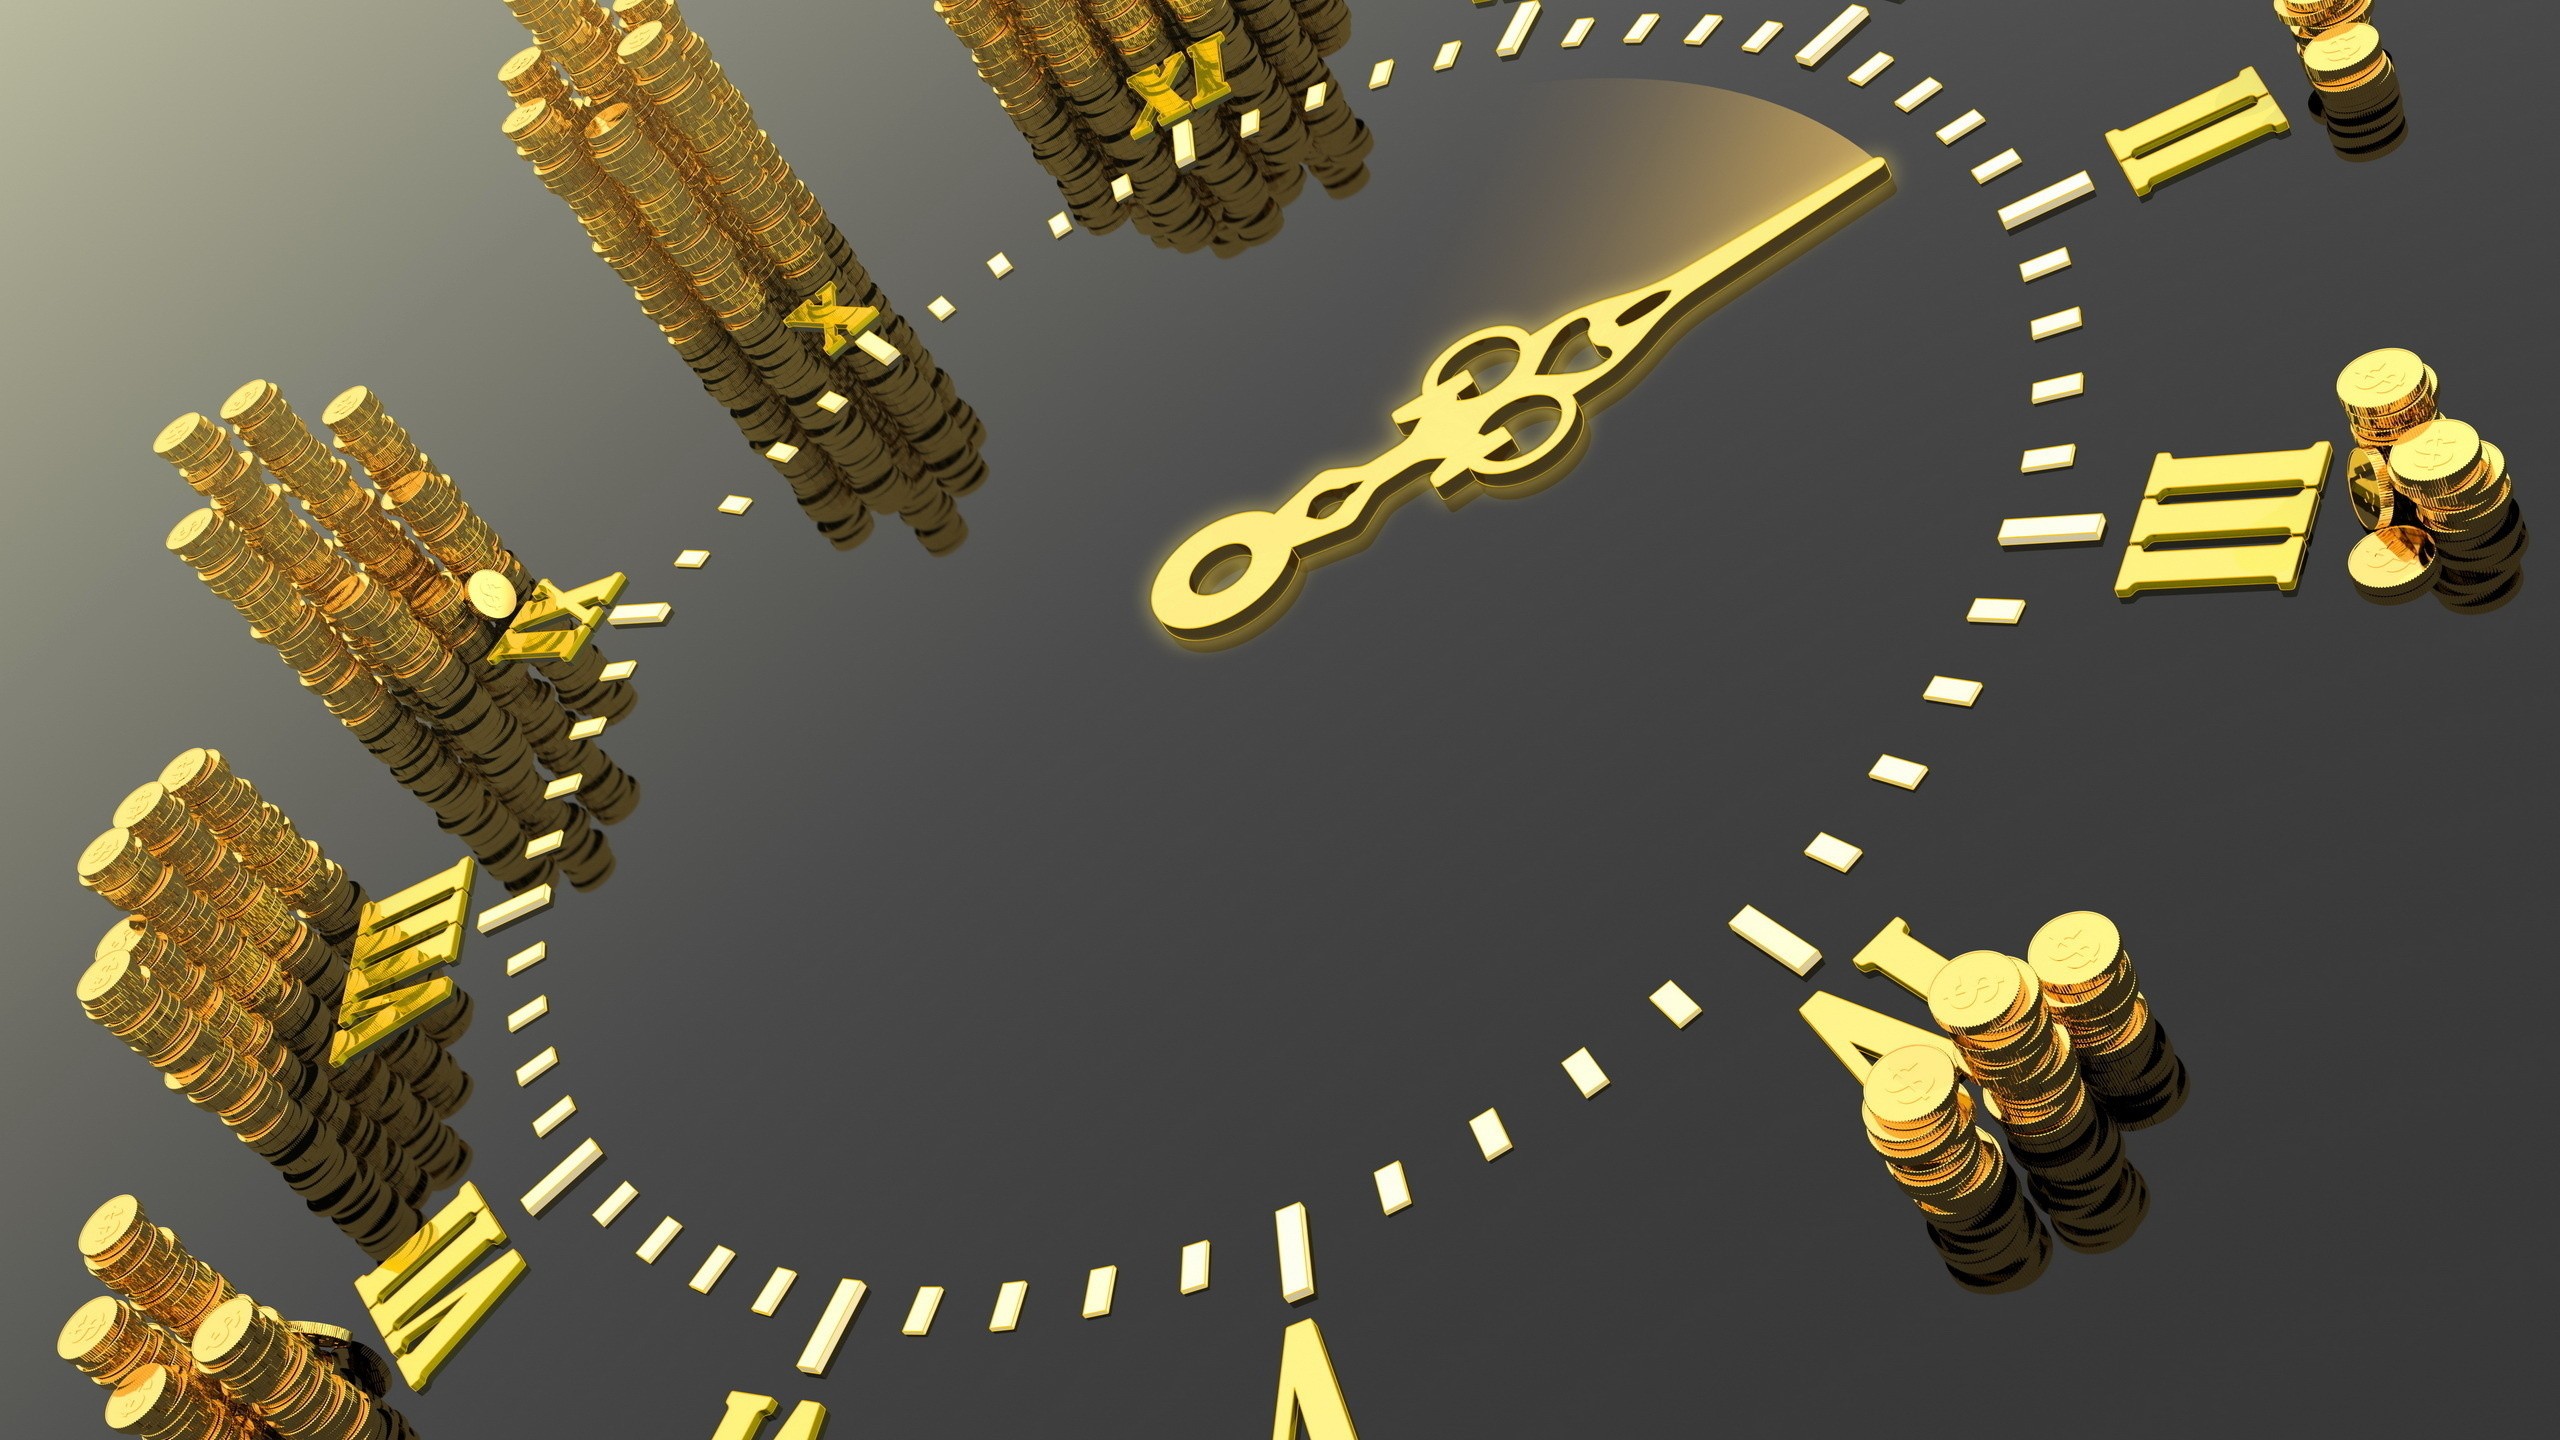 General 2560x1440 money CGI clocks simple background time Roman numerals reflection digital art gold